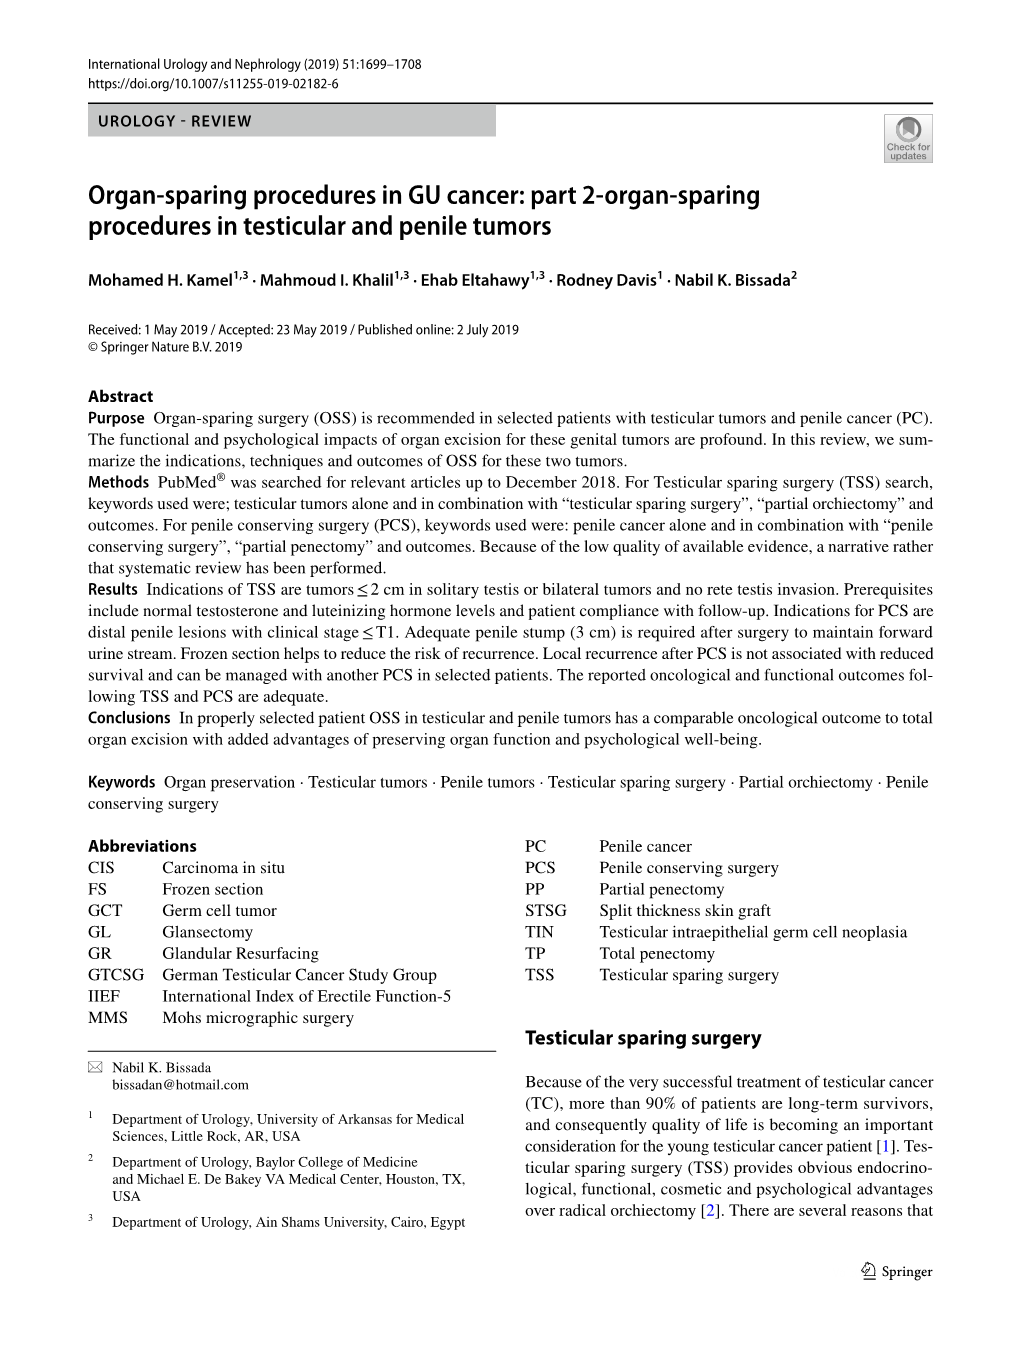 Part 2-Organ-Sparing Procedures in Testicular and Penile Tumors